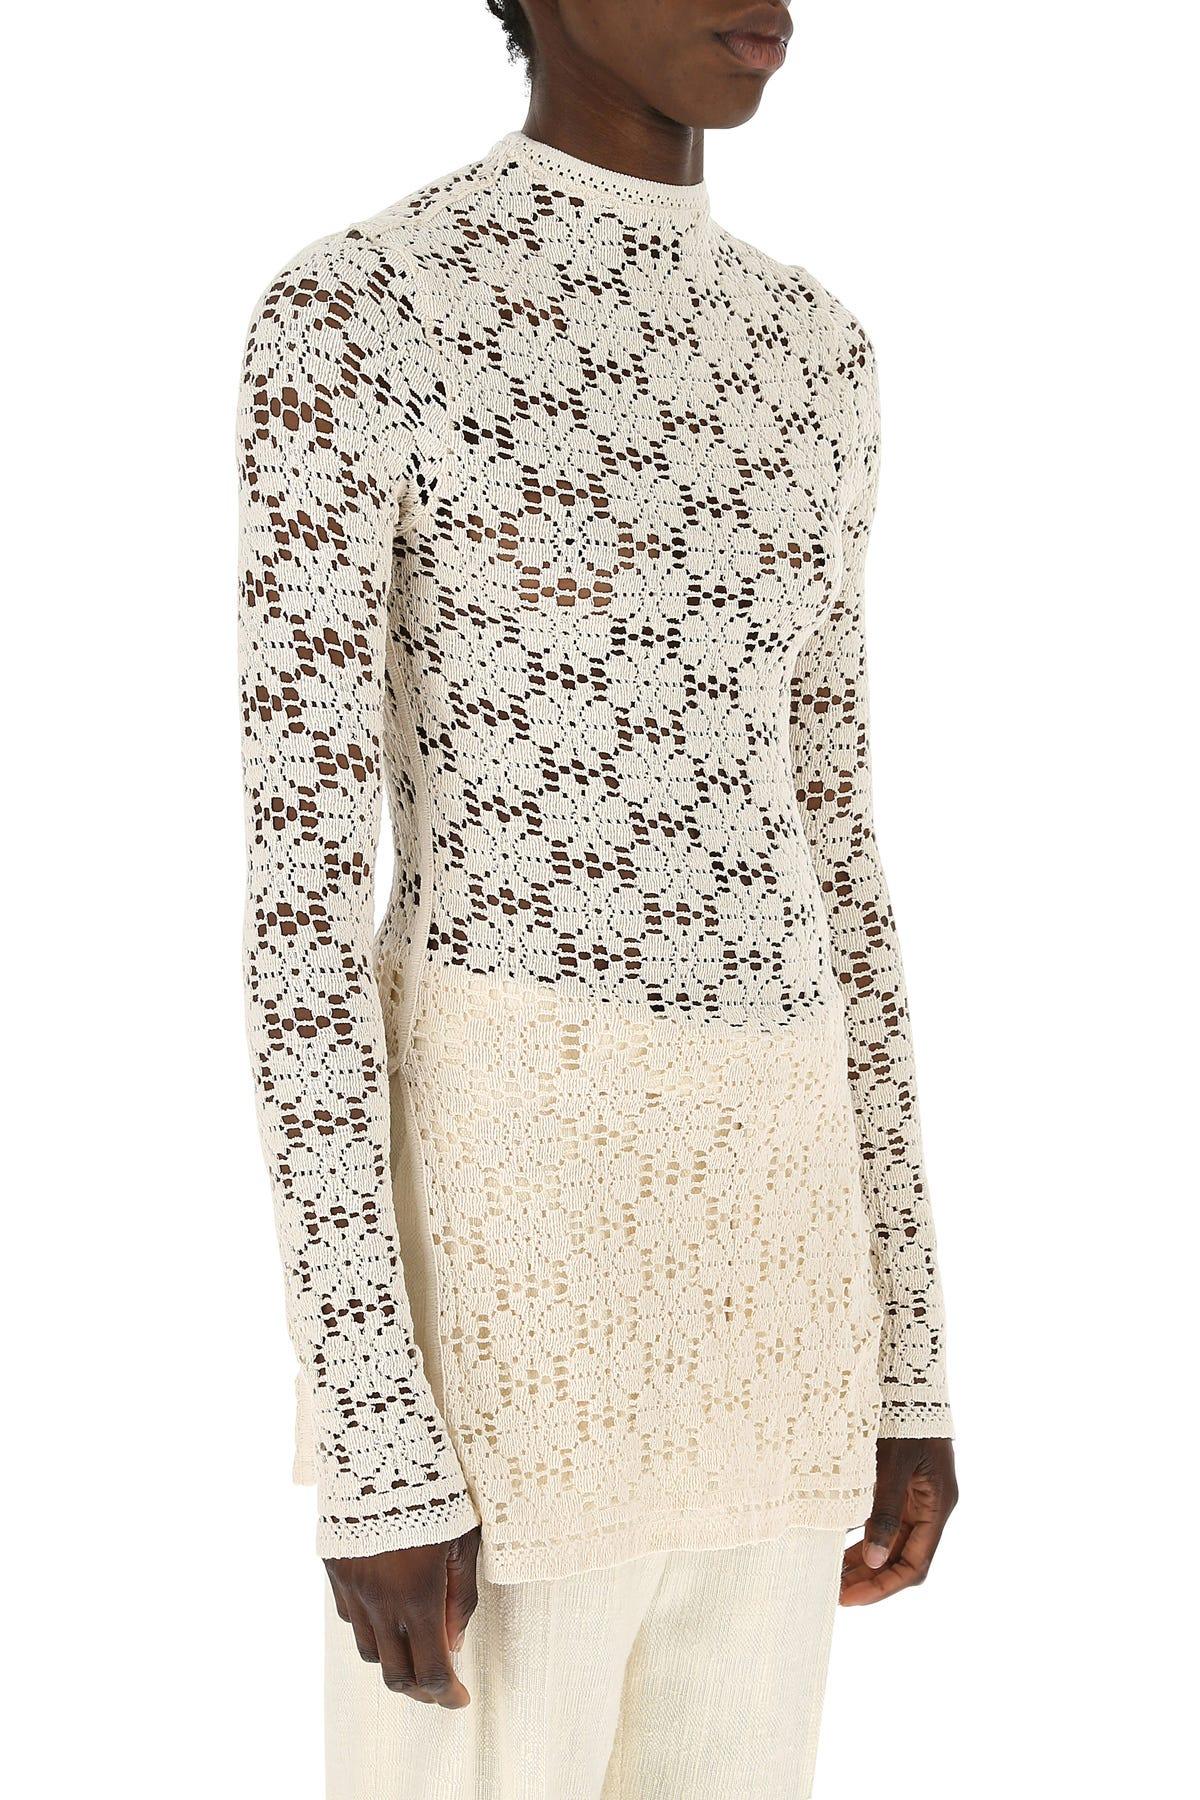 Jil Sander Ivory Crochet Top Jil Sa in White | Lyst